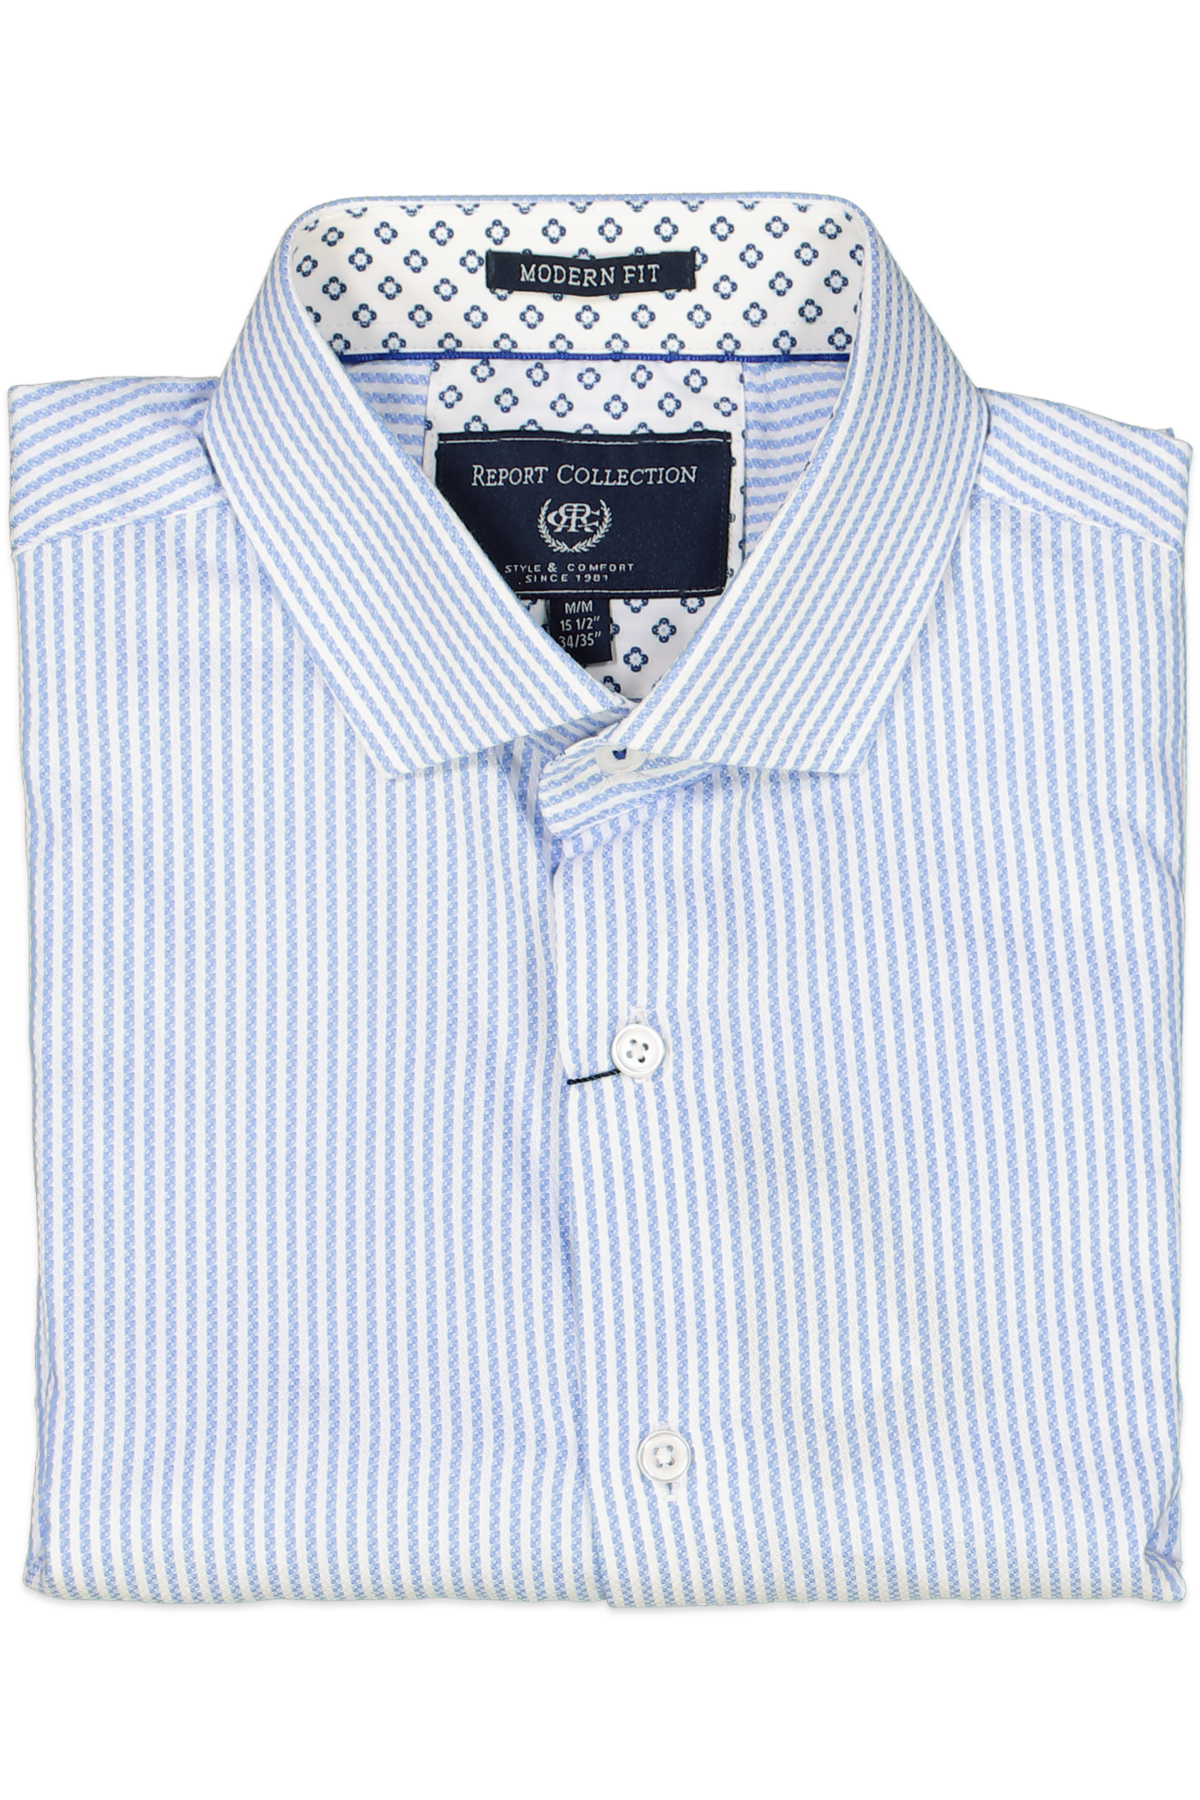 Report Collection Mens Textured Stripe Modern Fit Dress Shirt Blue